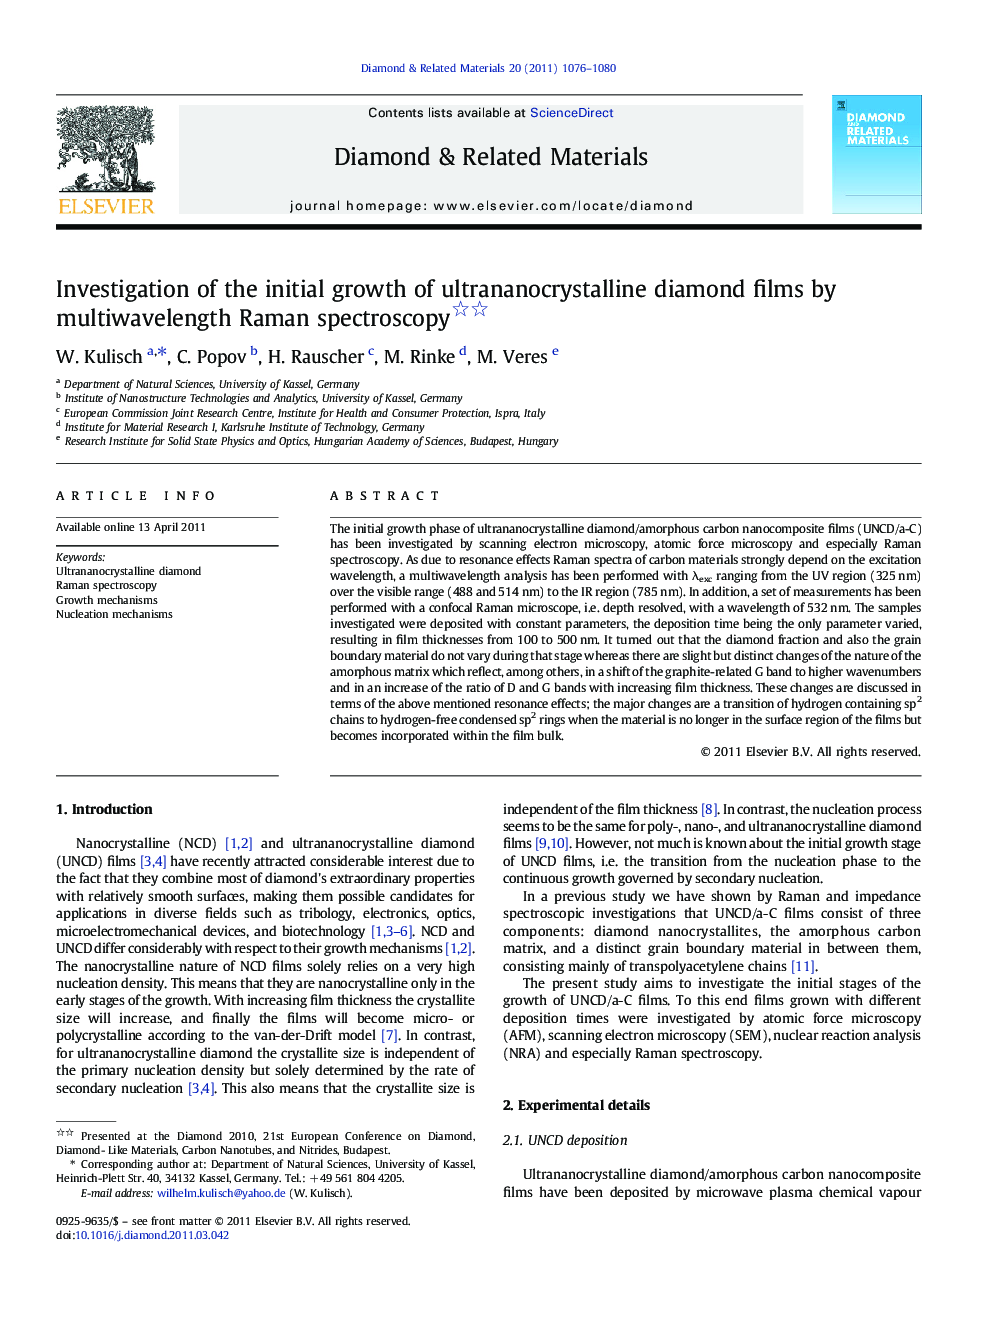 Investigation of the initial growth of ultrananocrystalline diamond films by multiwavelength Raman spectroscopy 